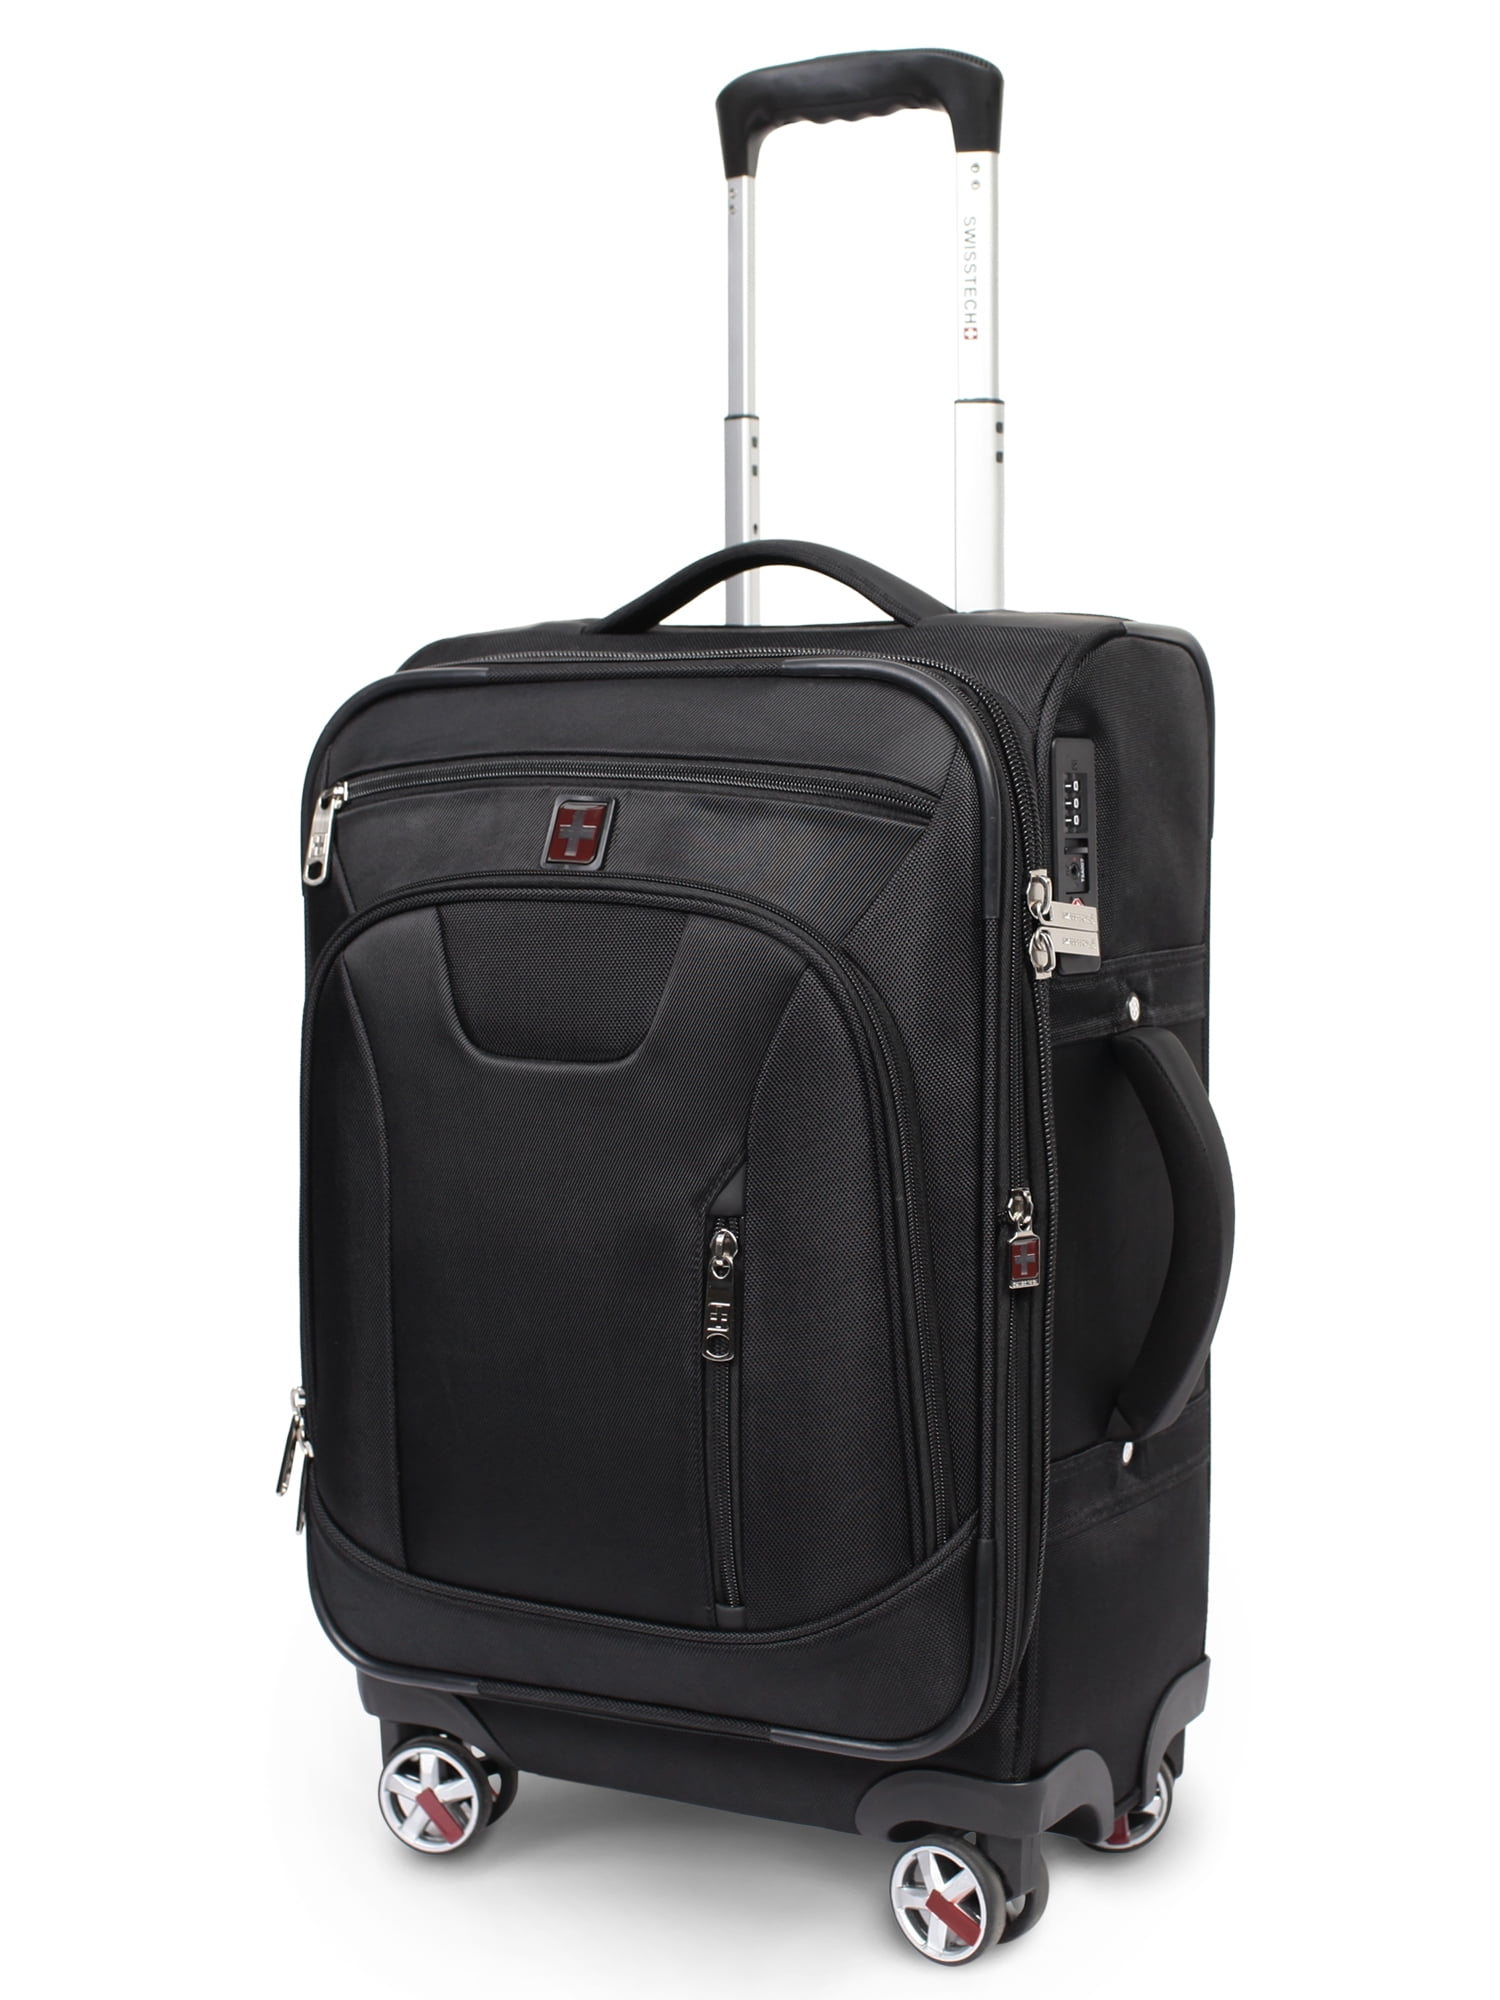 SwissTech Executive 21" Softside Carry-on Luggage, Black, (Walmart Exclusive)